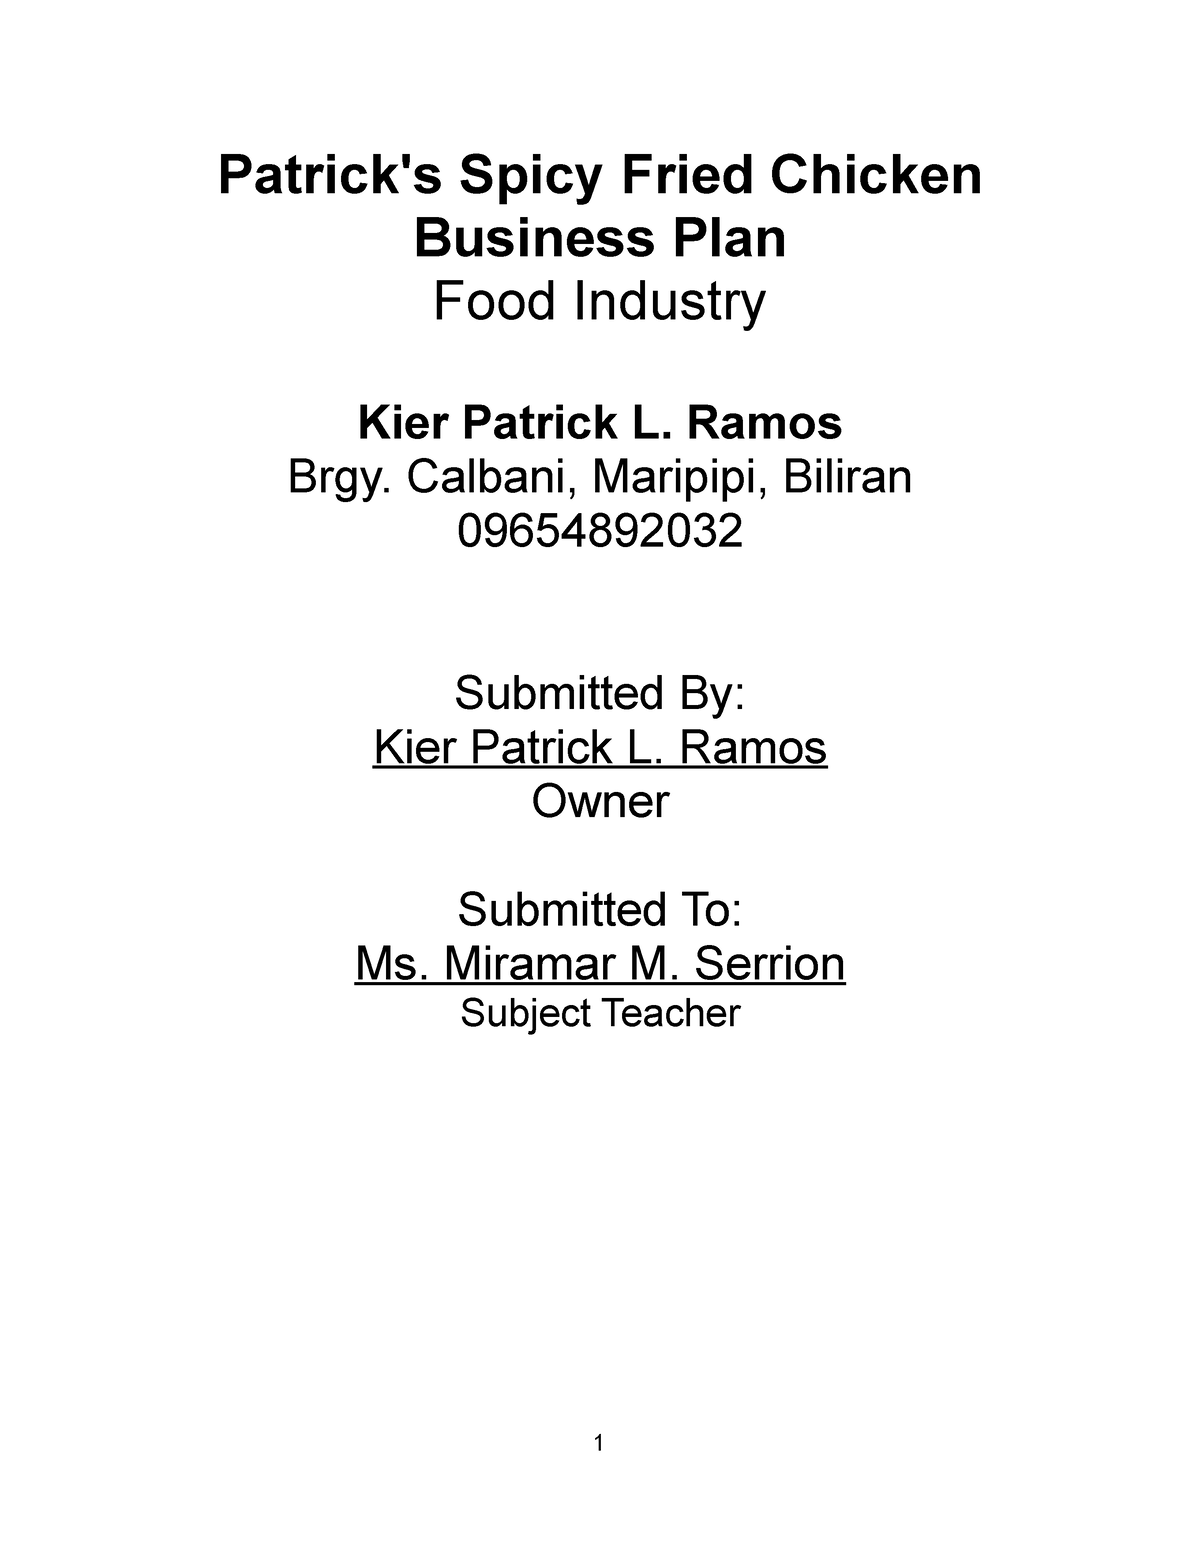 fried chicken business plan sample